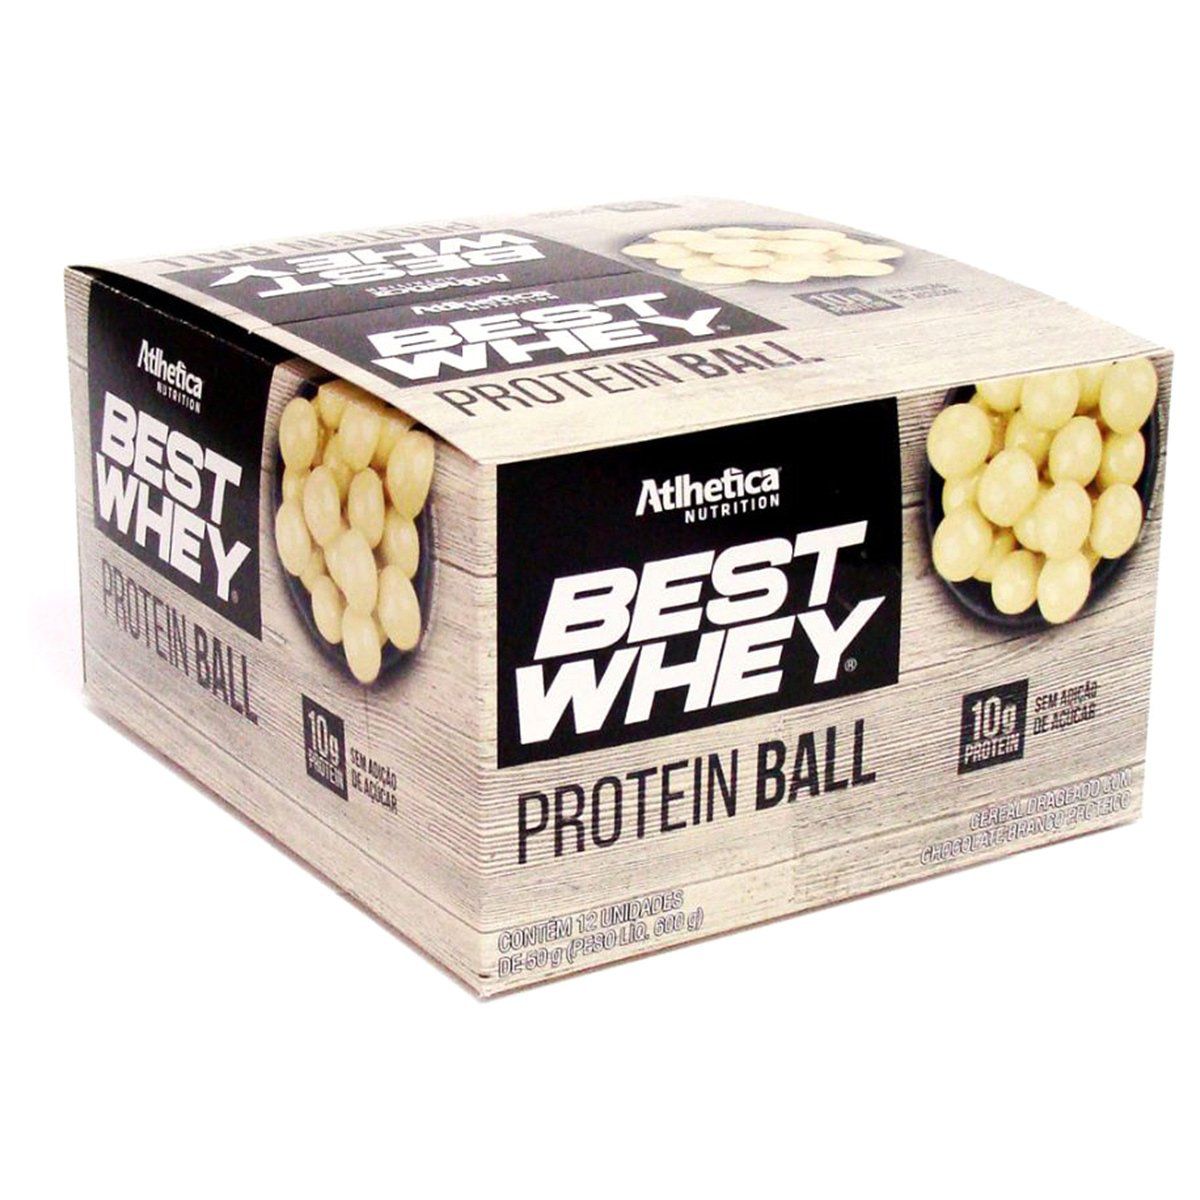 Caixa 12 unidades Best Whey Protein Ball Chocolate Branco (50g) - Atlhetica Nutrition